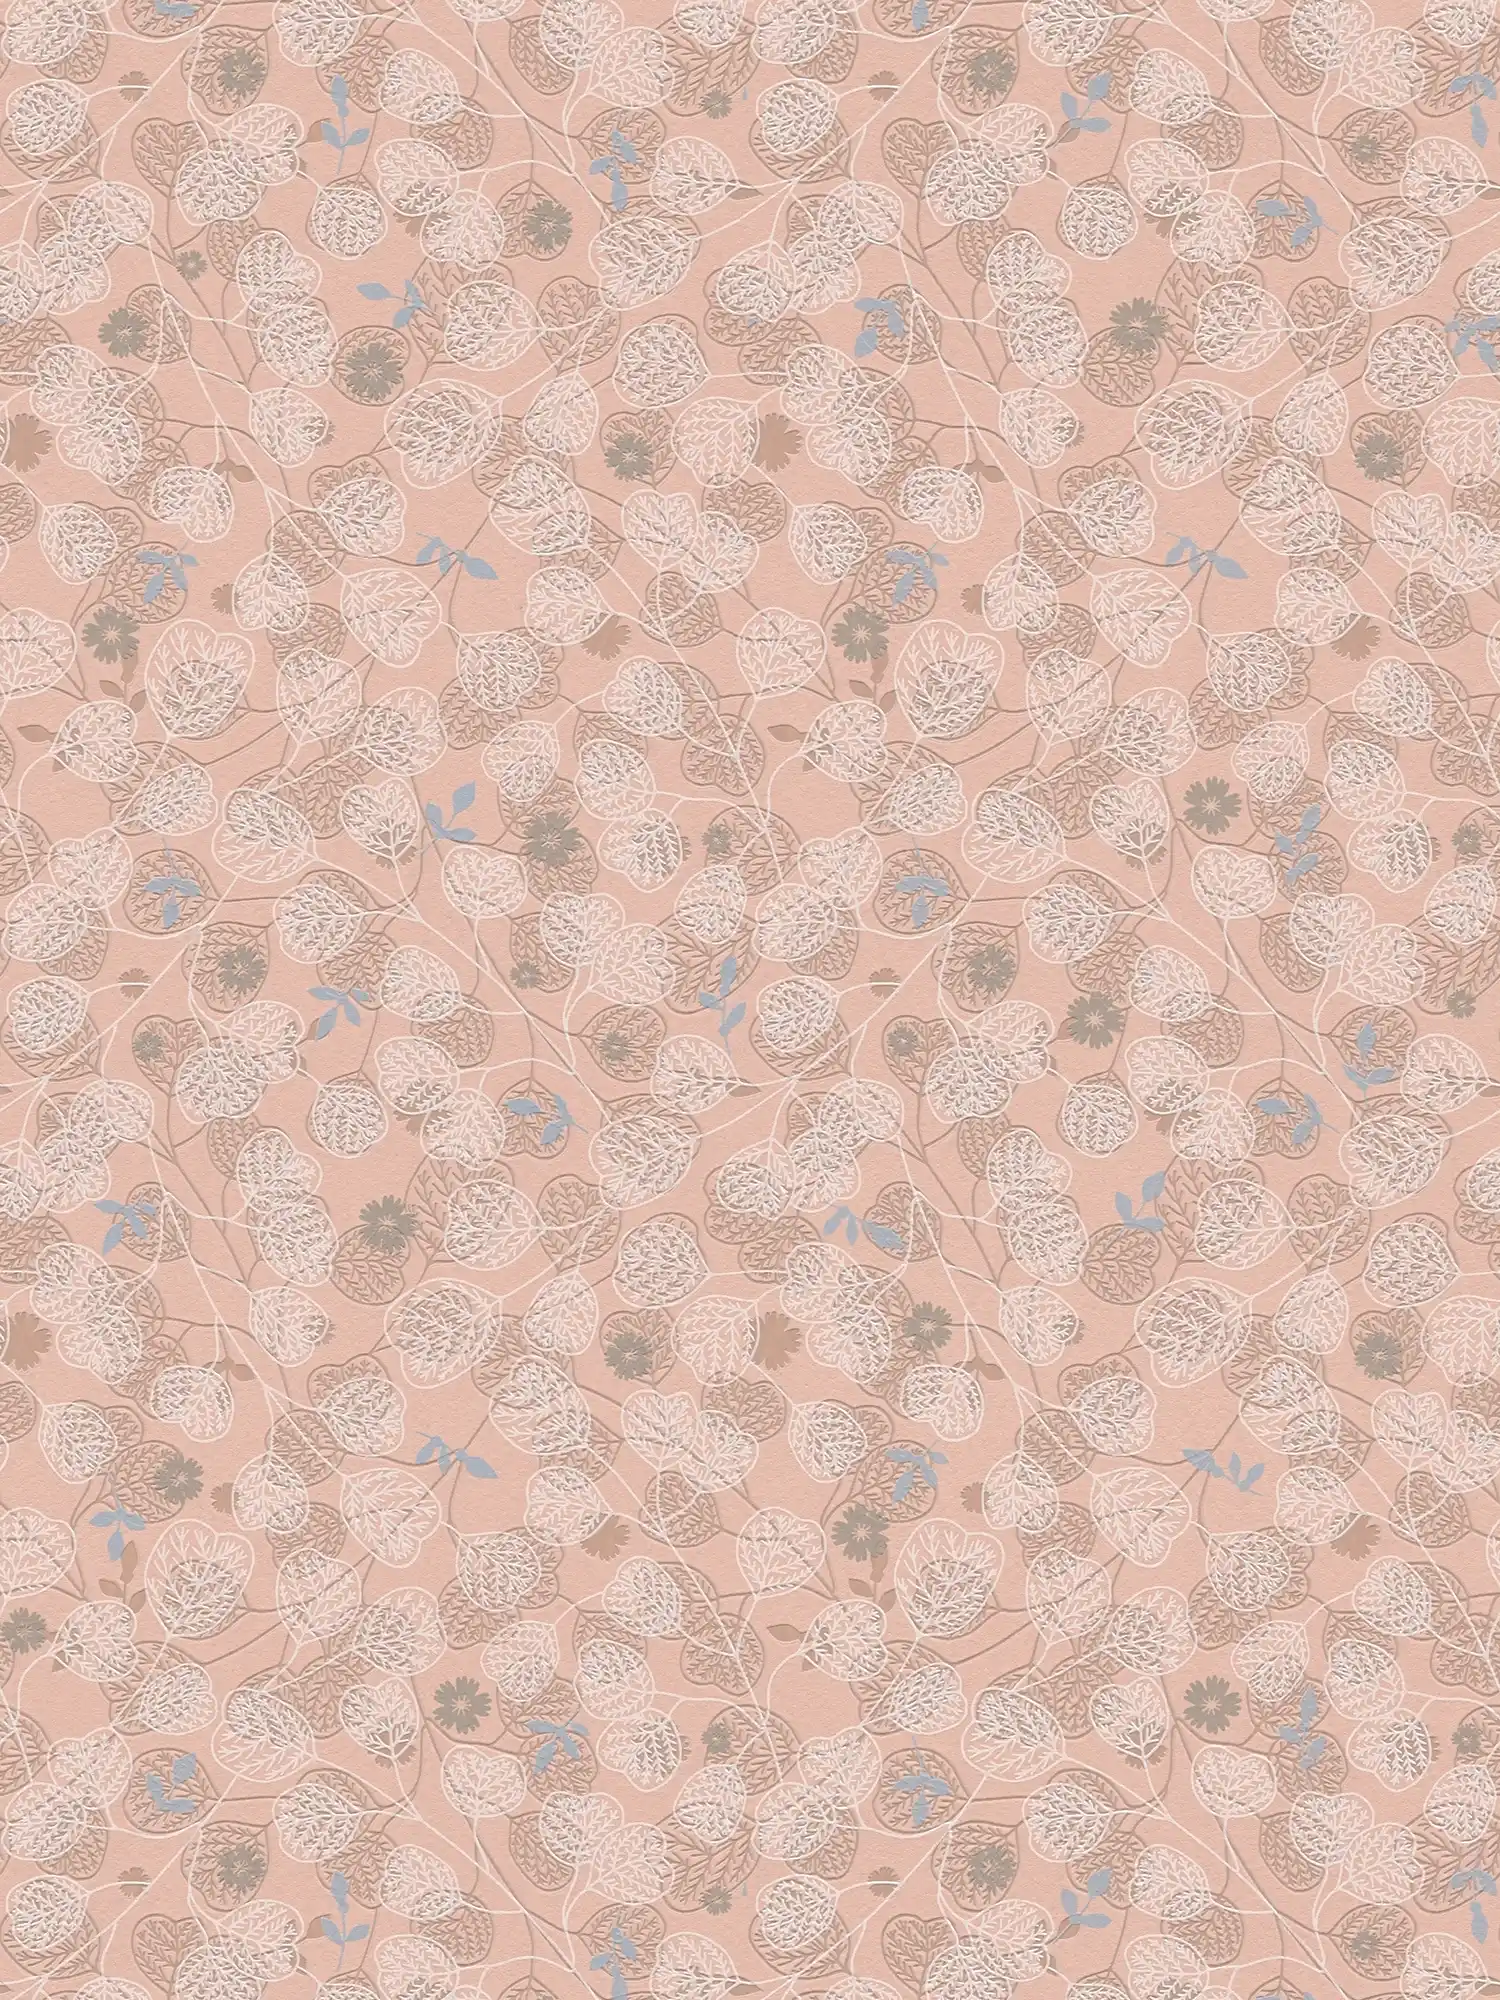 Vintage floral pattern non-woven wallpaper - pink, white, blue
